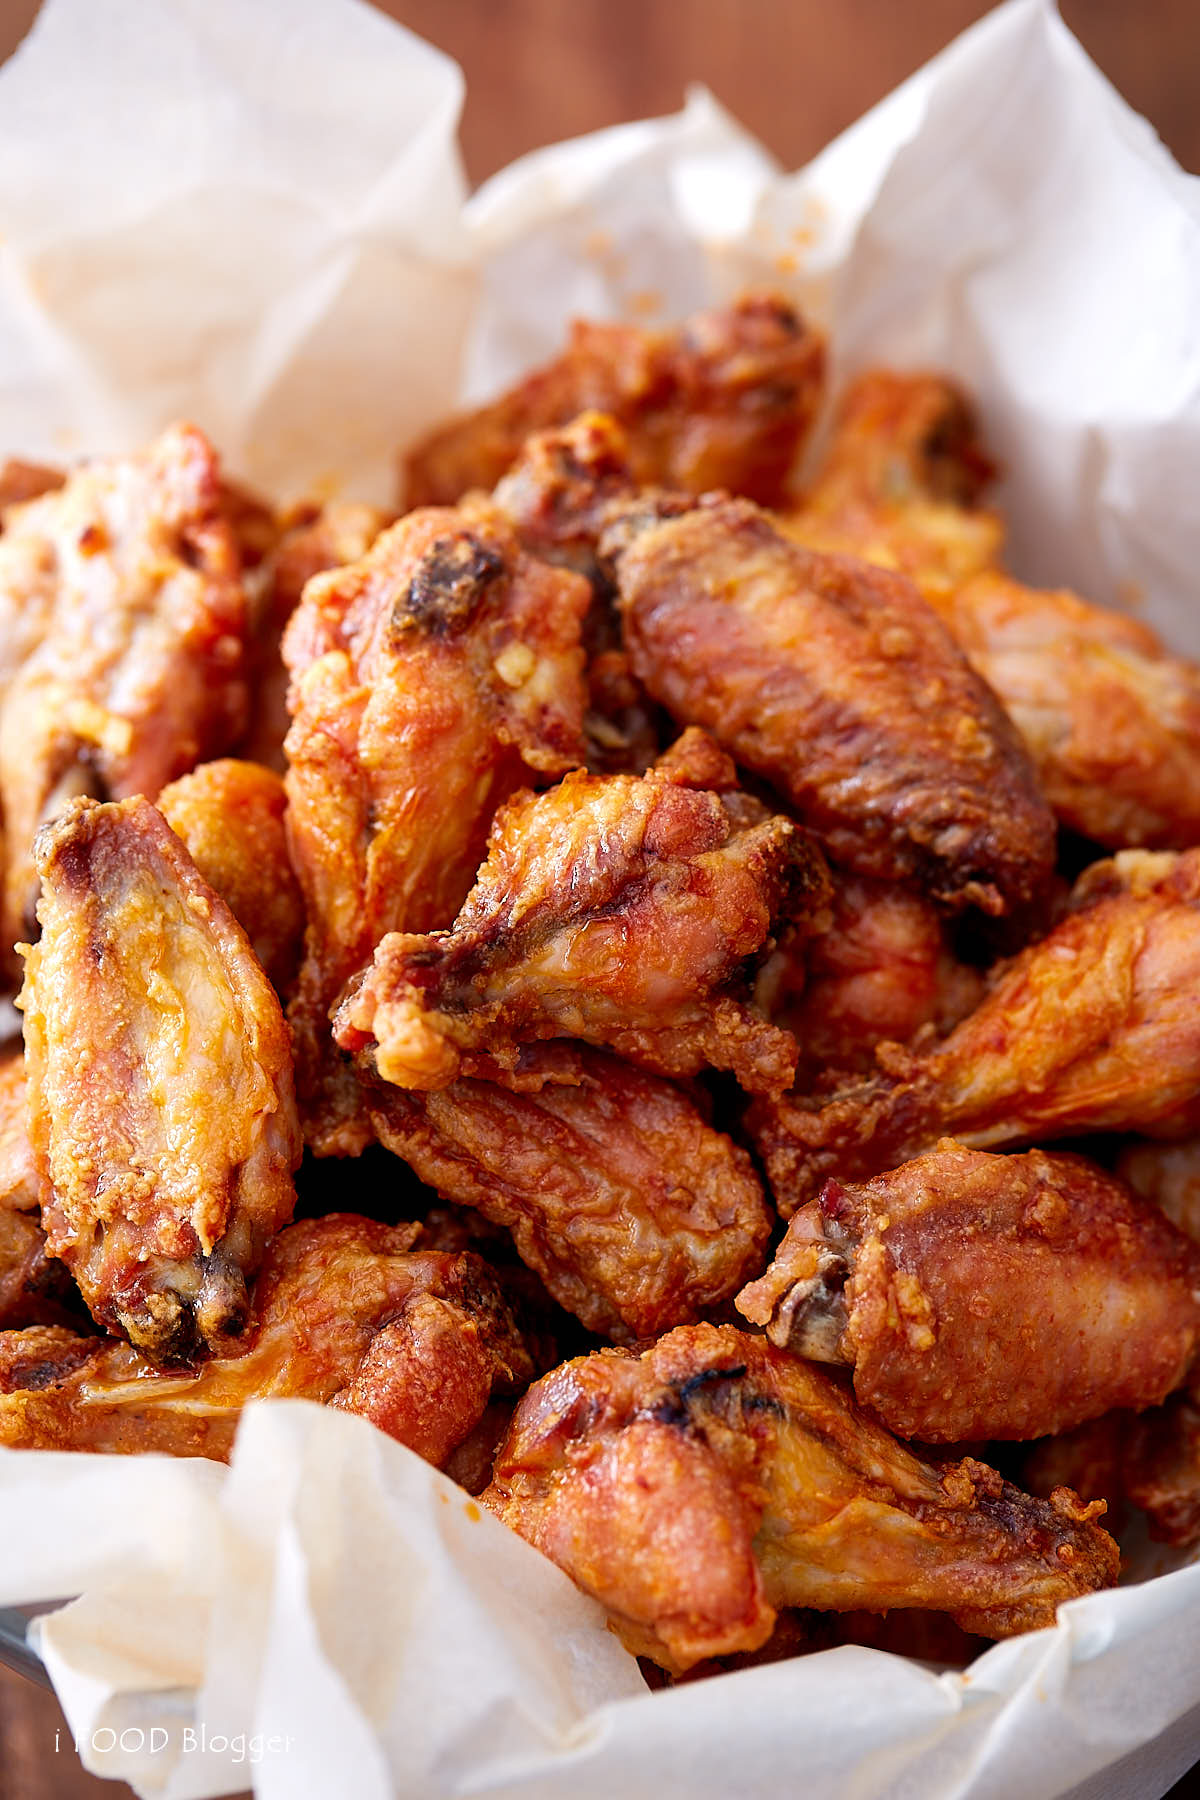 Extra Crispy Baked Chicken Wings - i FOOD Blogger